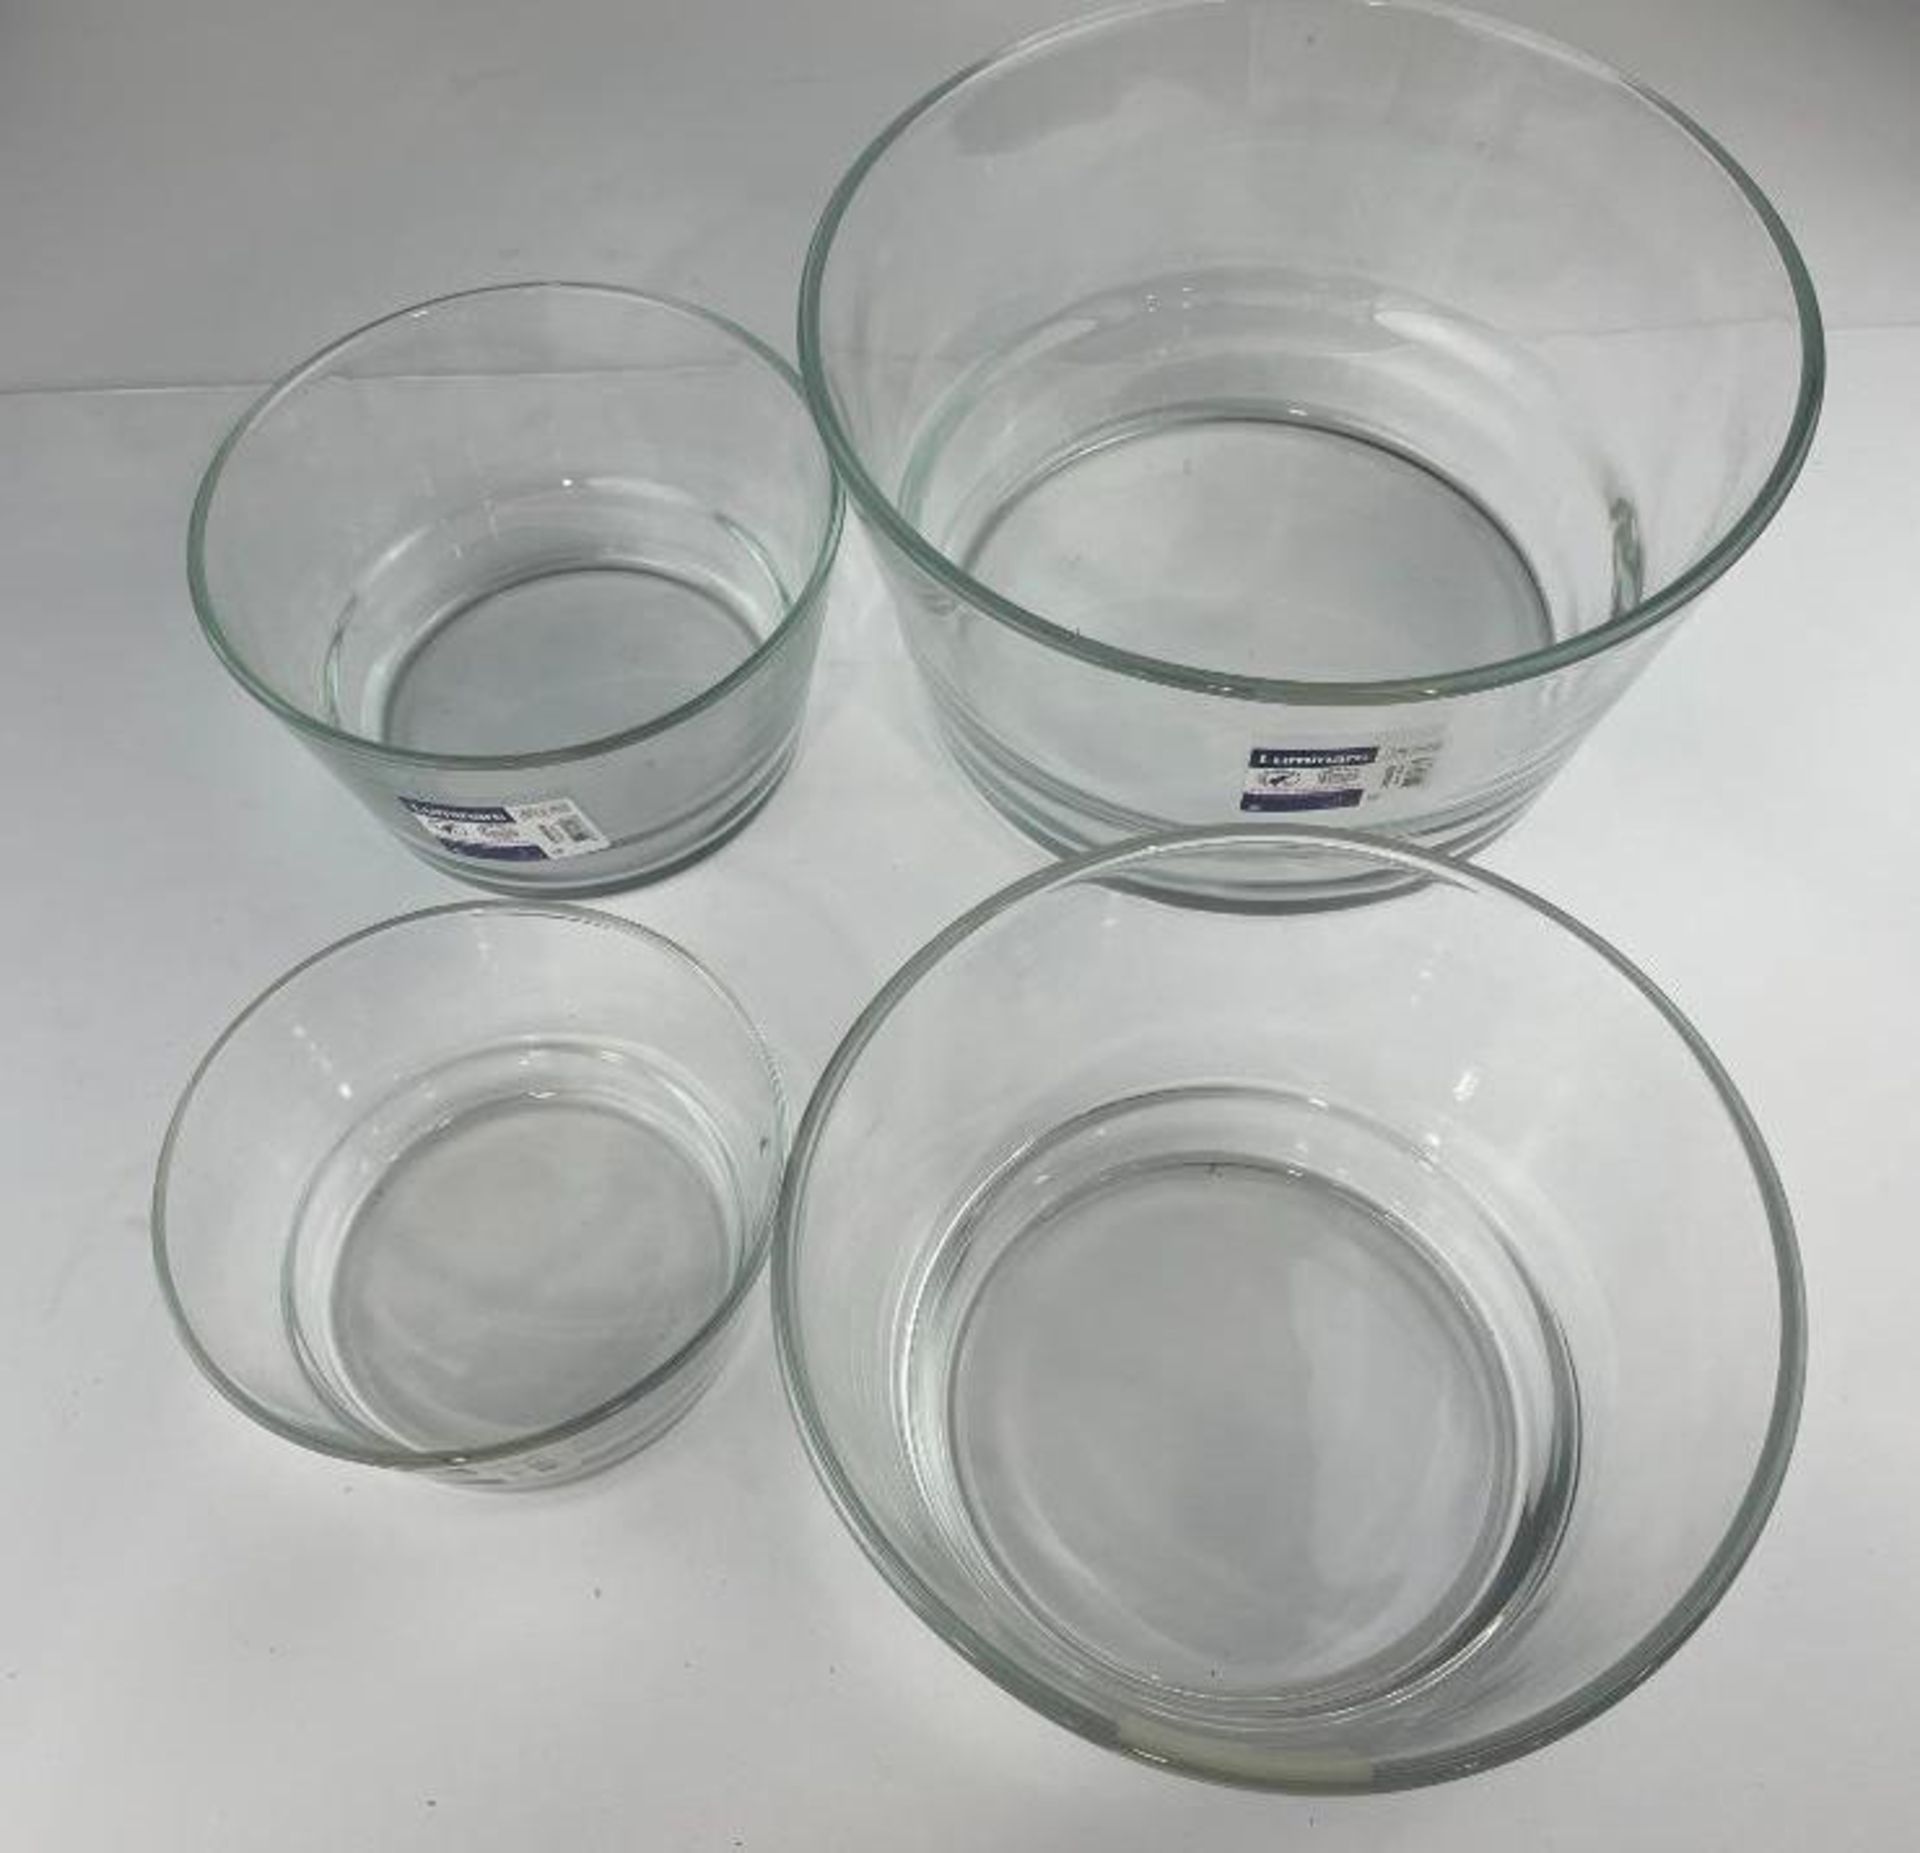 NEW ARCOROC UNISSON 4 PIECES GLASS BOWL SET - Image 4 of 4